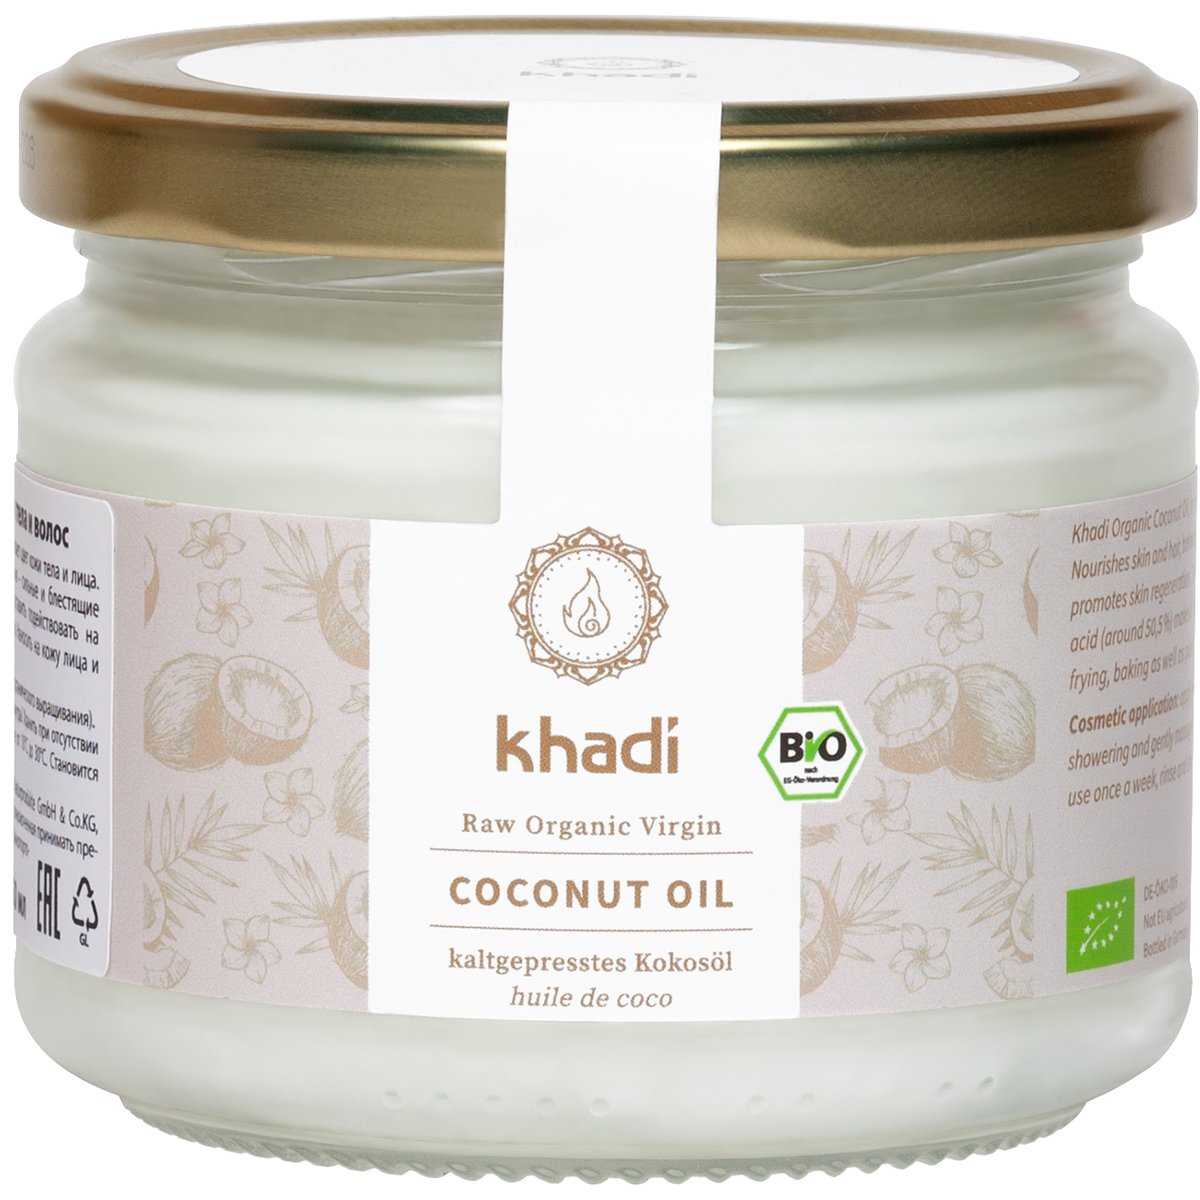 Khadi Кокосовое масло «кади био» для тела и волос 250 мл (Kh